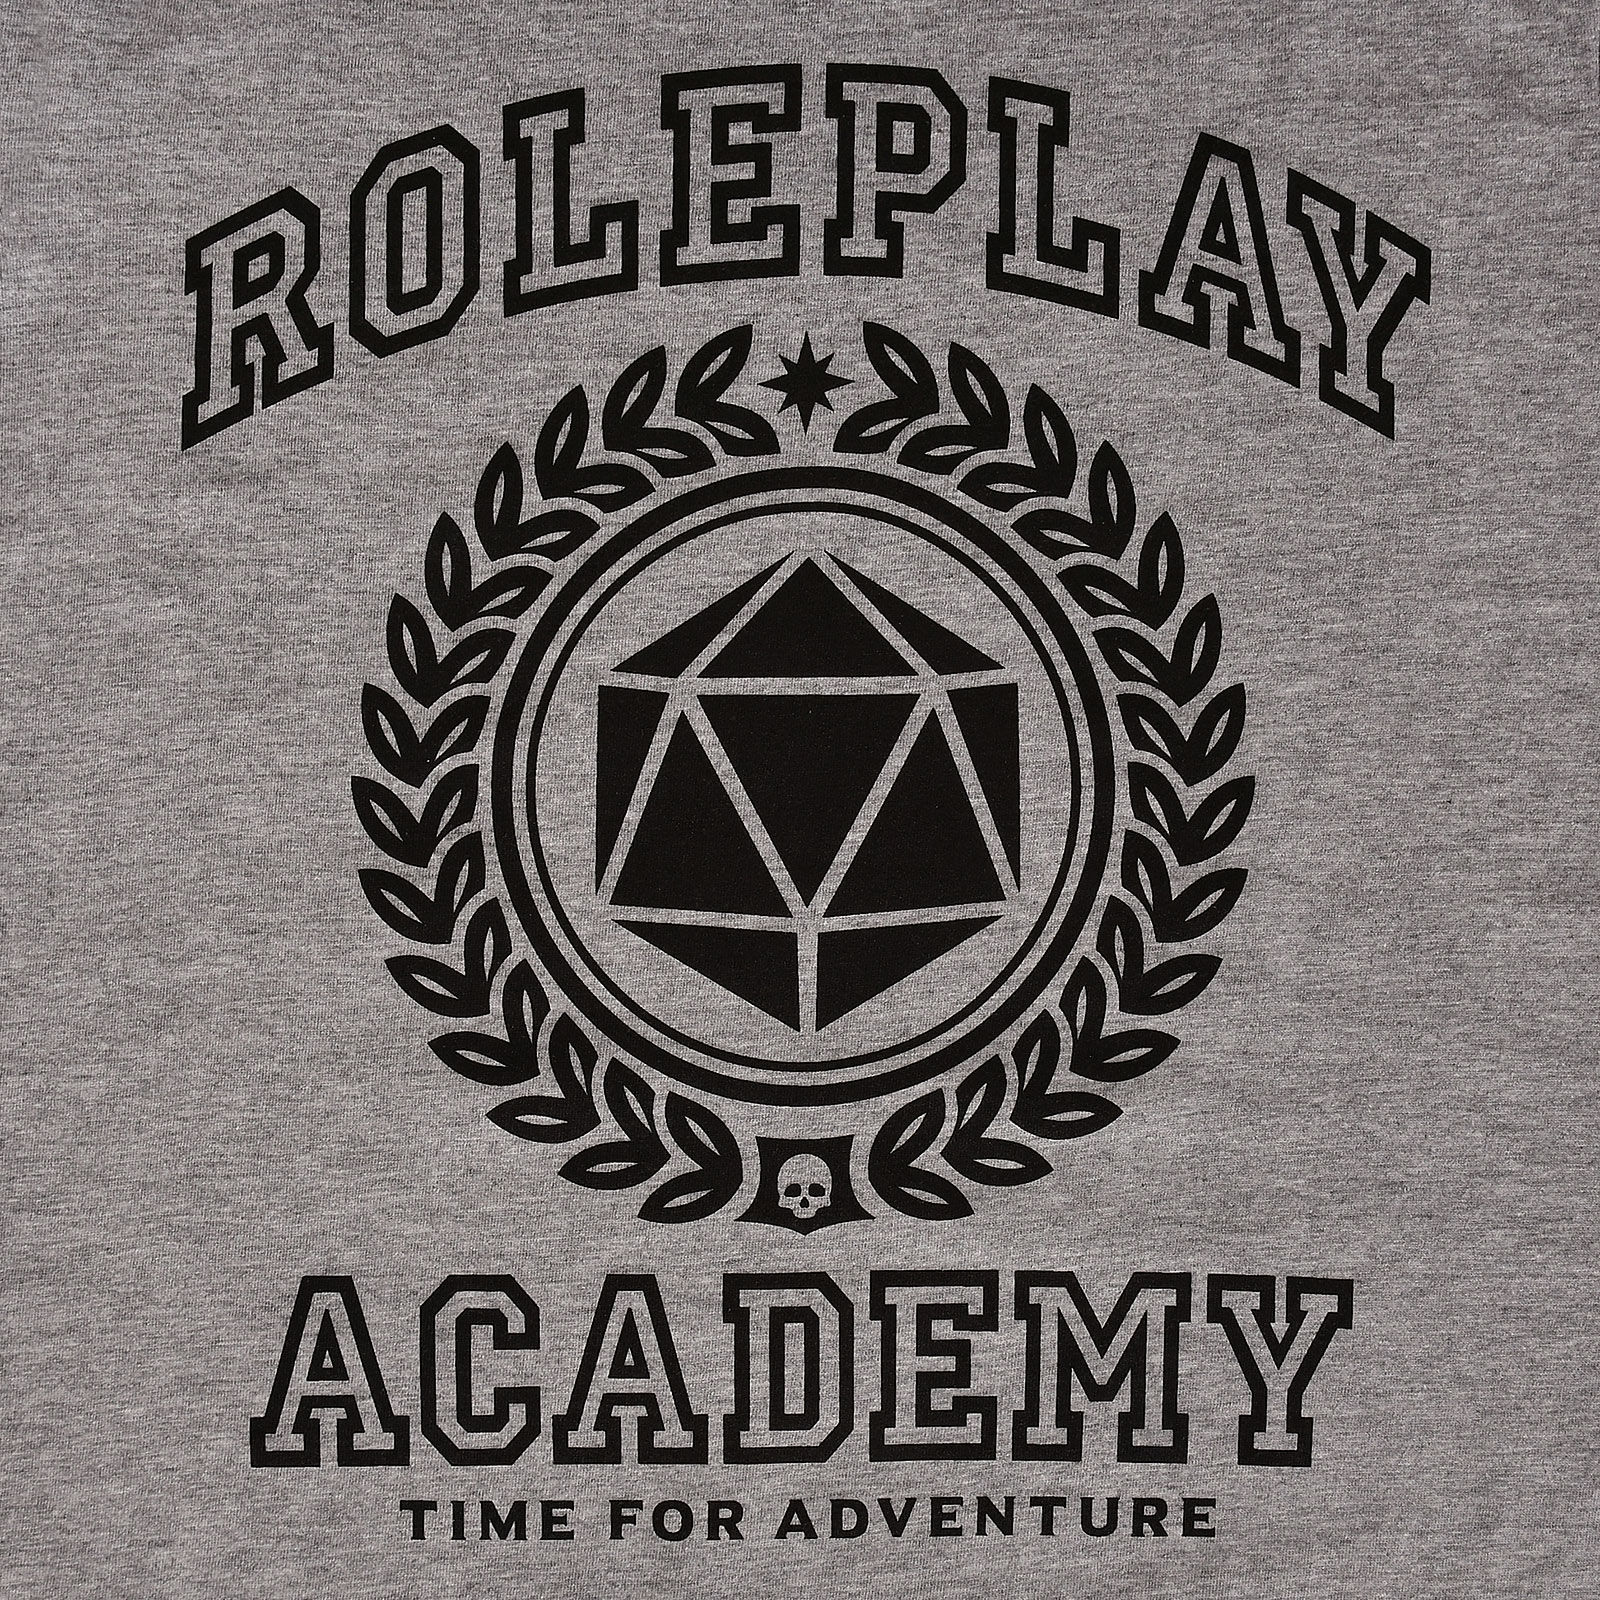 Roleplay Academy T-Shirt grau